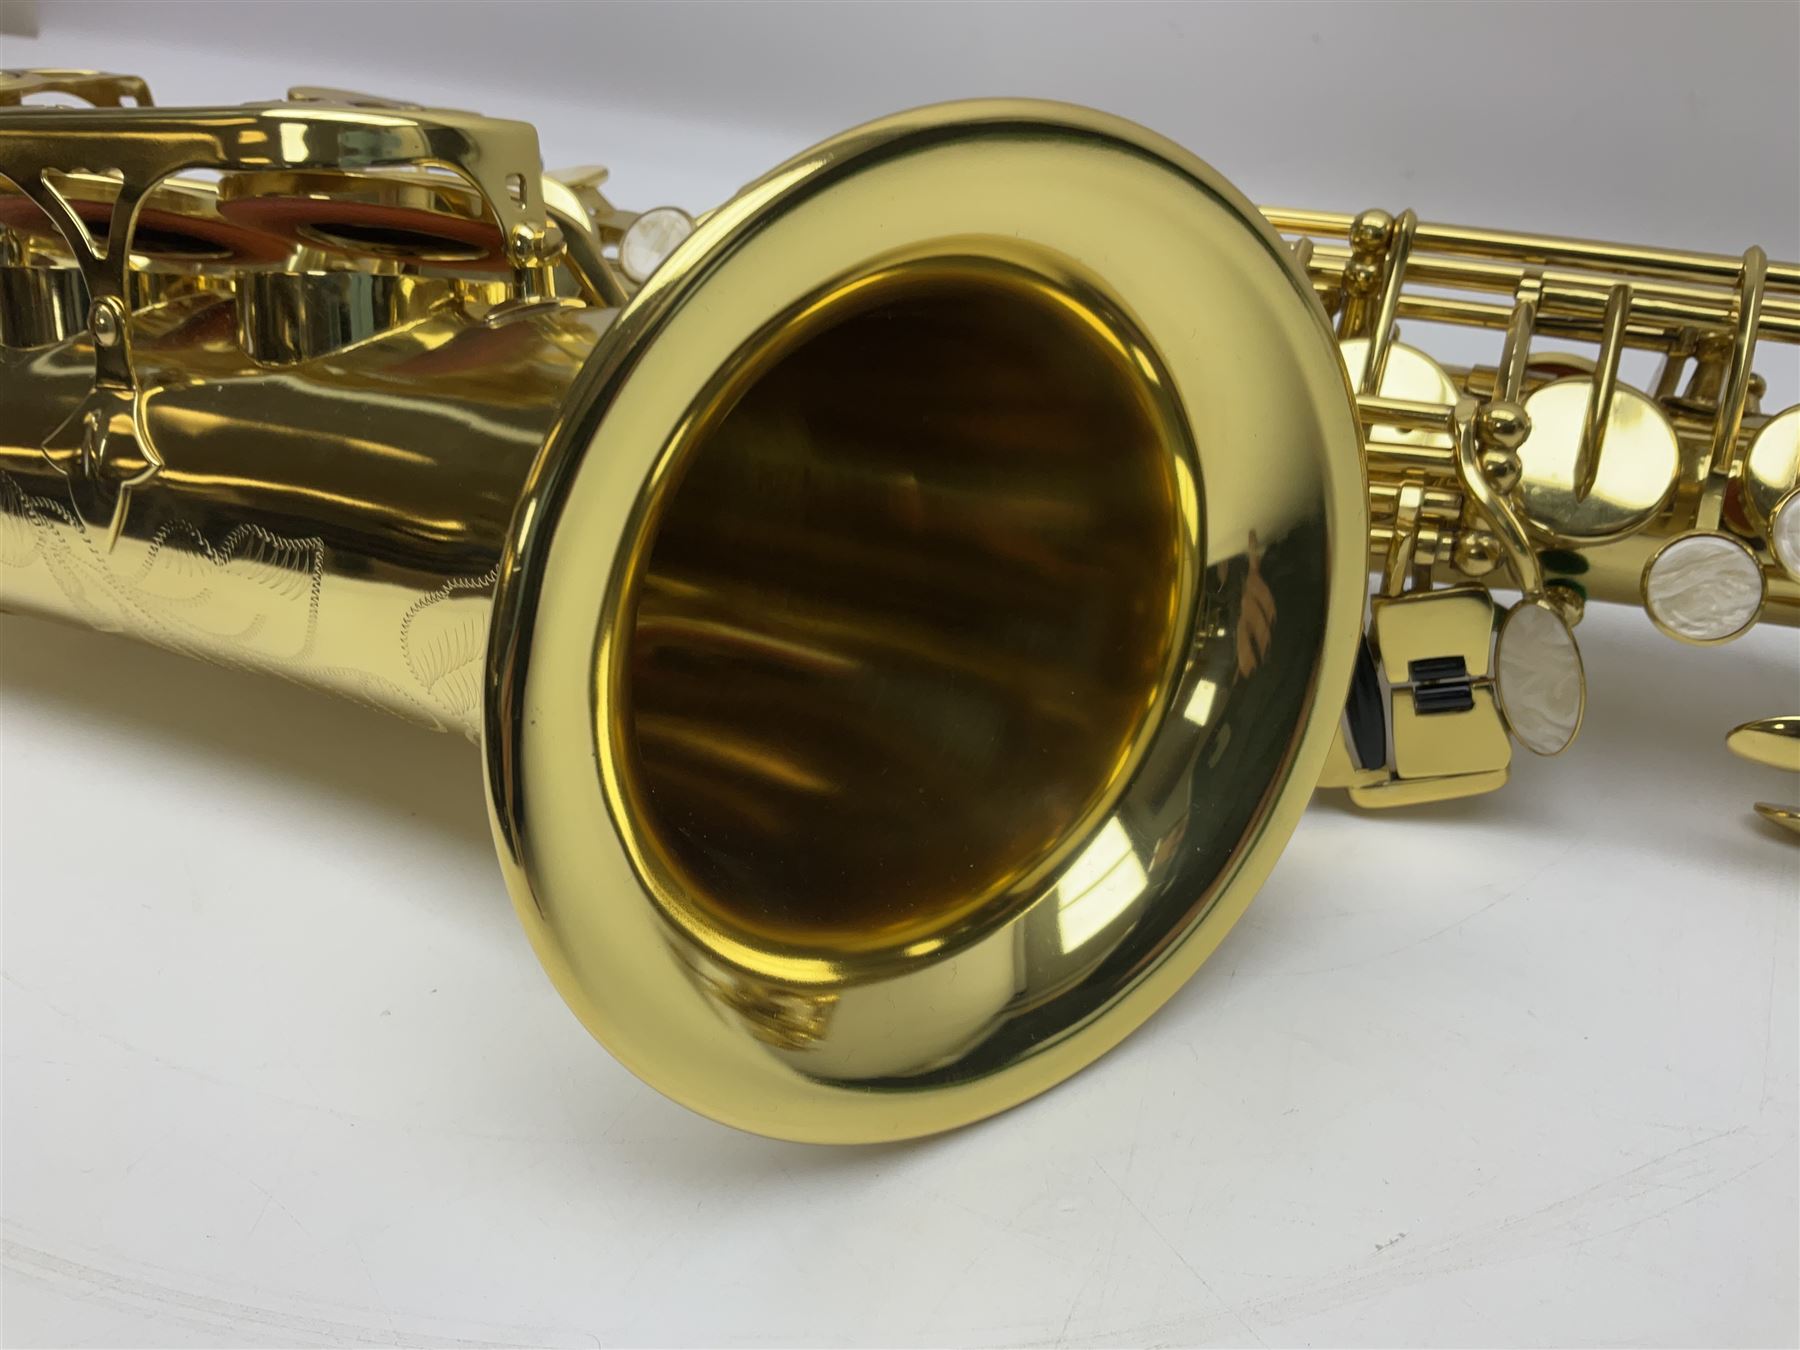 Arnolds & Sons Model ASA-100 alto saxophone - Image 13 of 23